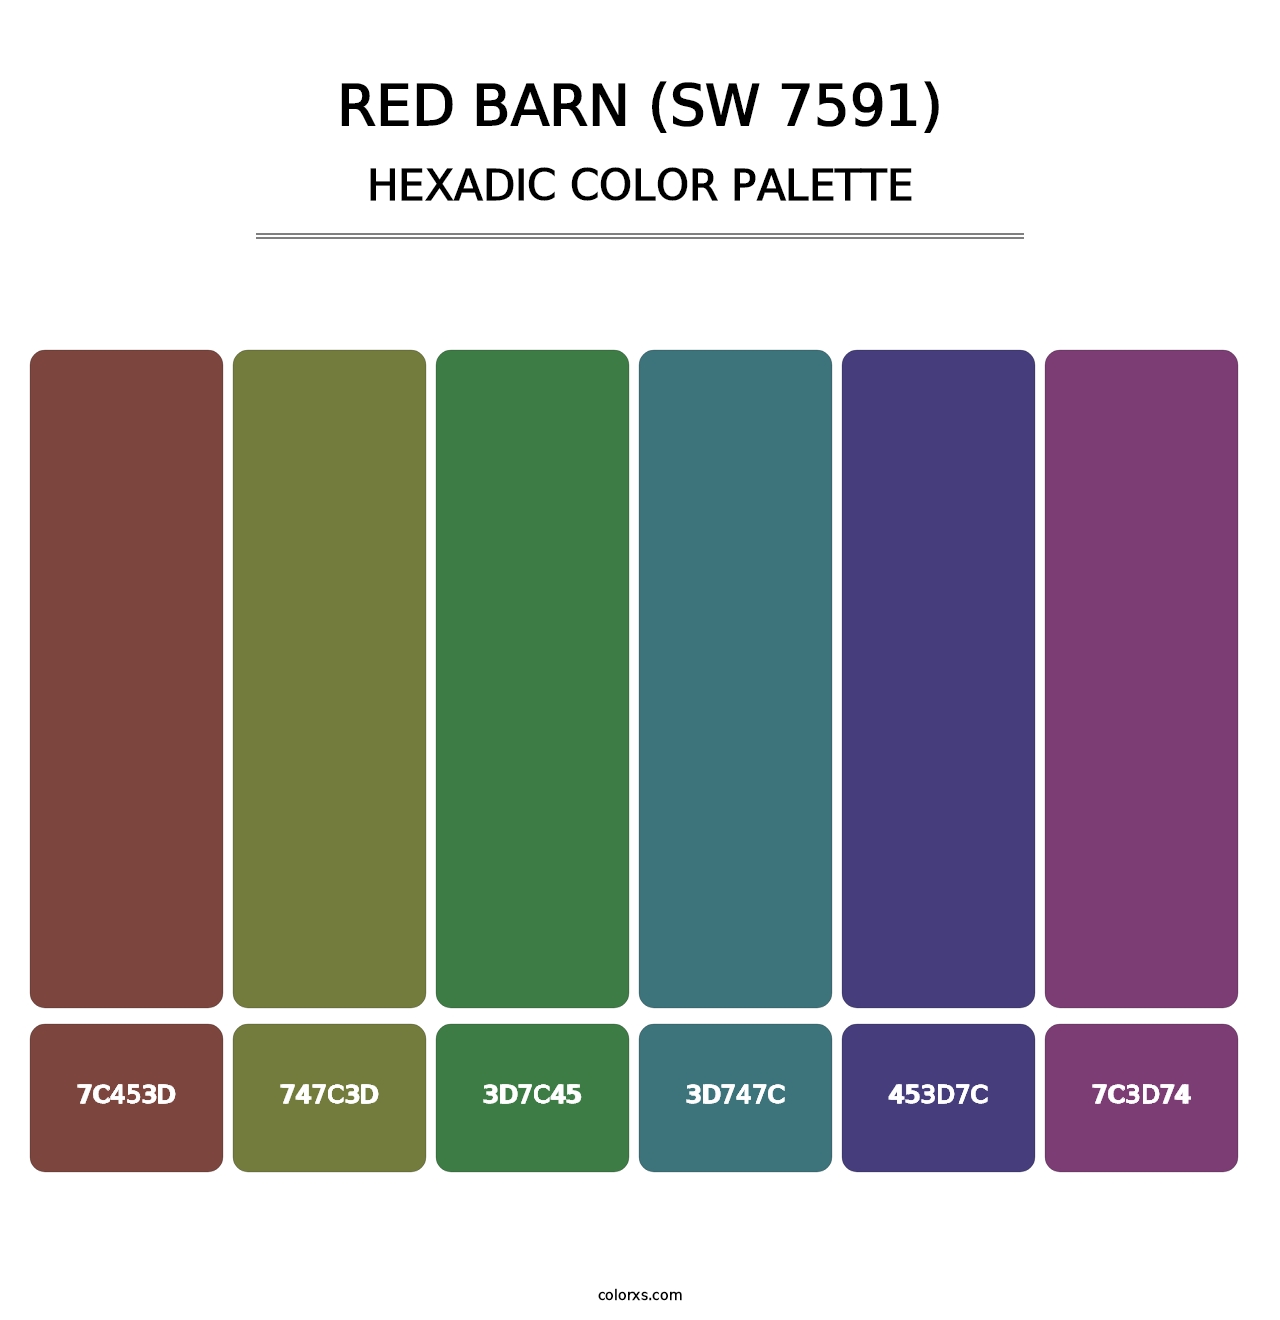 Red Barn (SW 7591) - Hexadic Color Palette